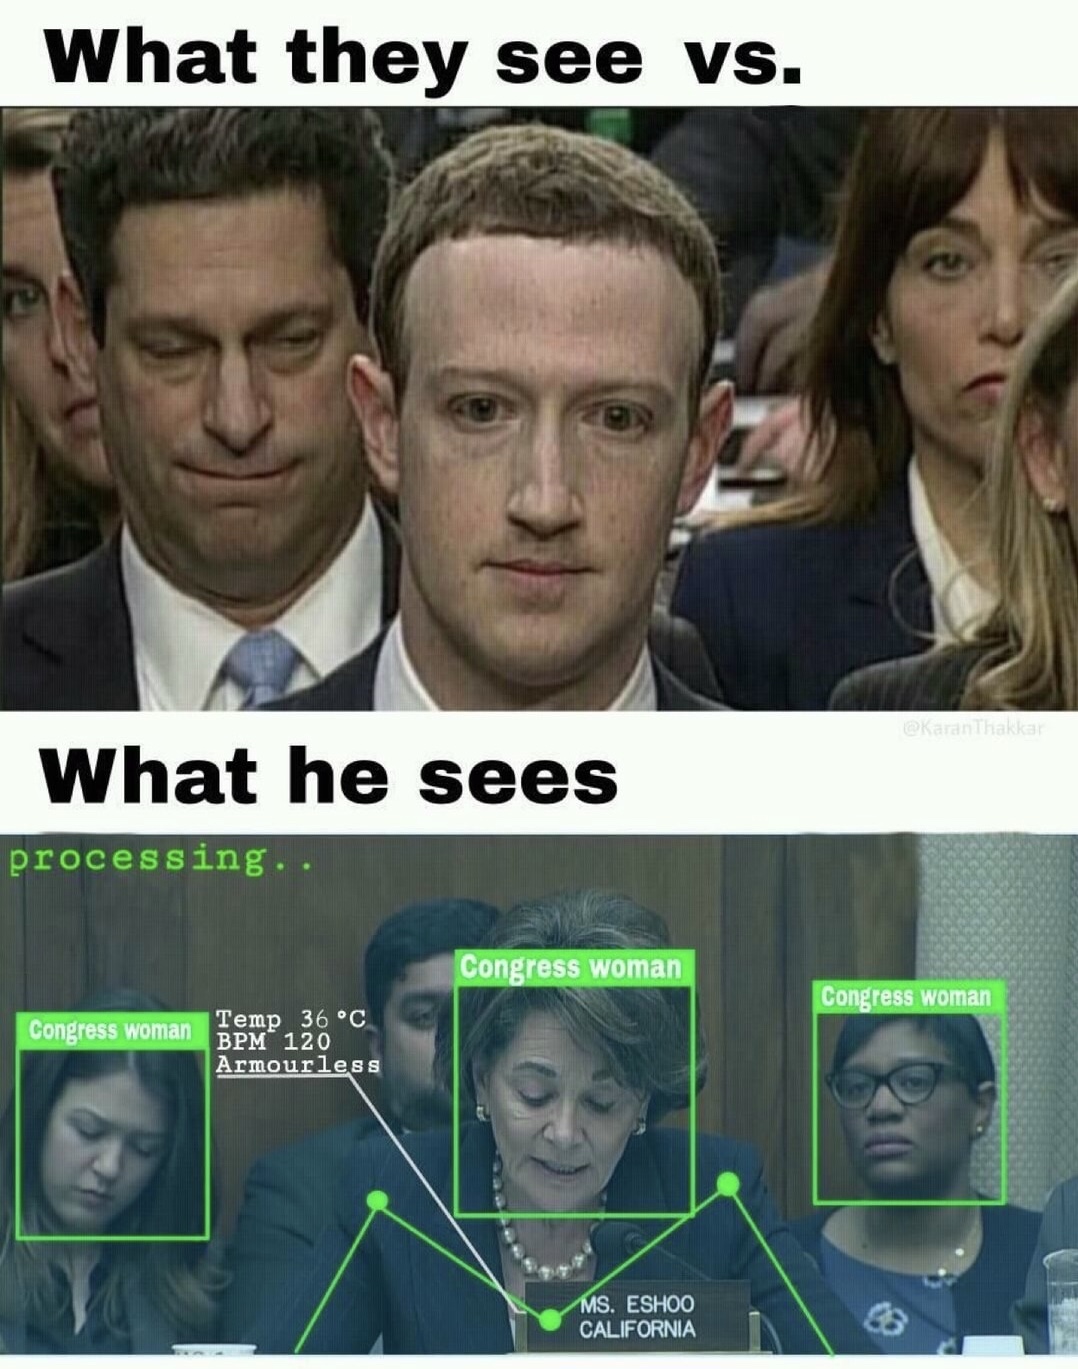 zuckerberg memes - What they see vs. What he sees processing.. Congress woman Congress woman Congress woman Temp 36 C Bpm 120 Armourless Ms. Eshoo California